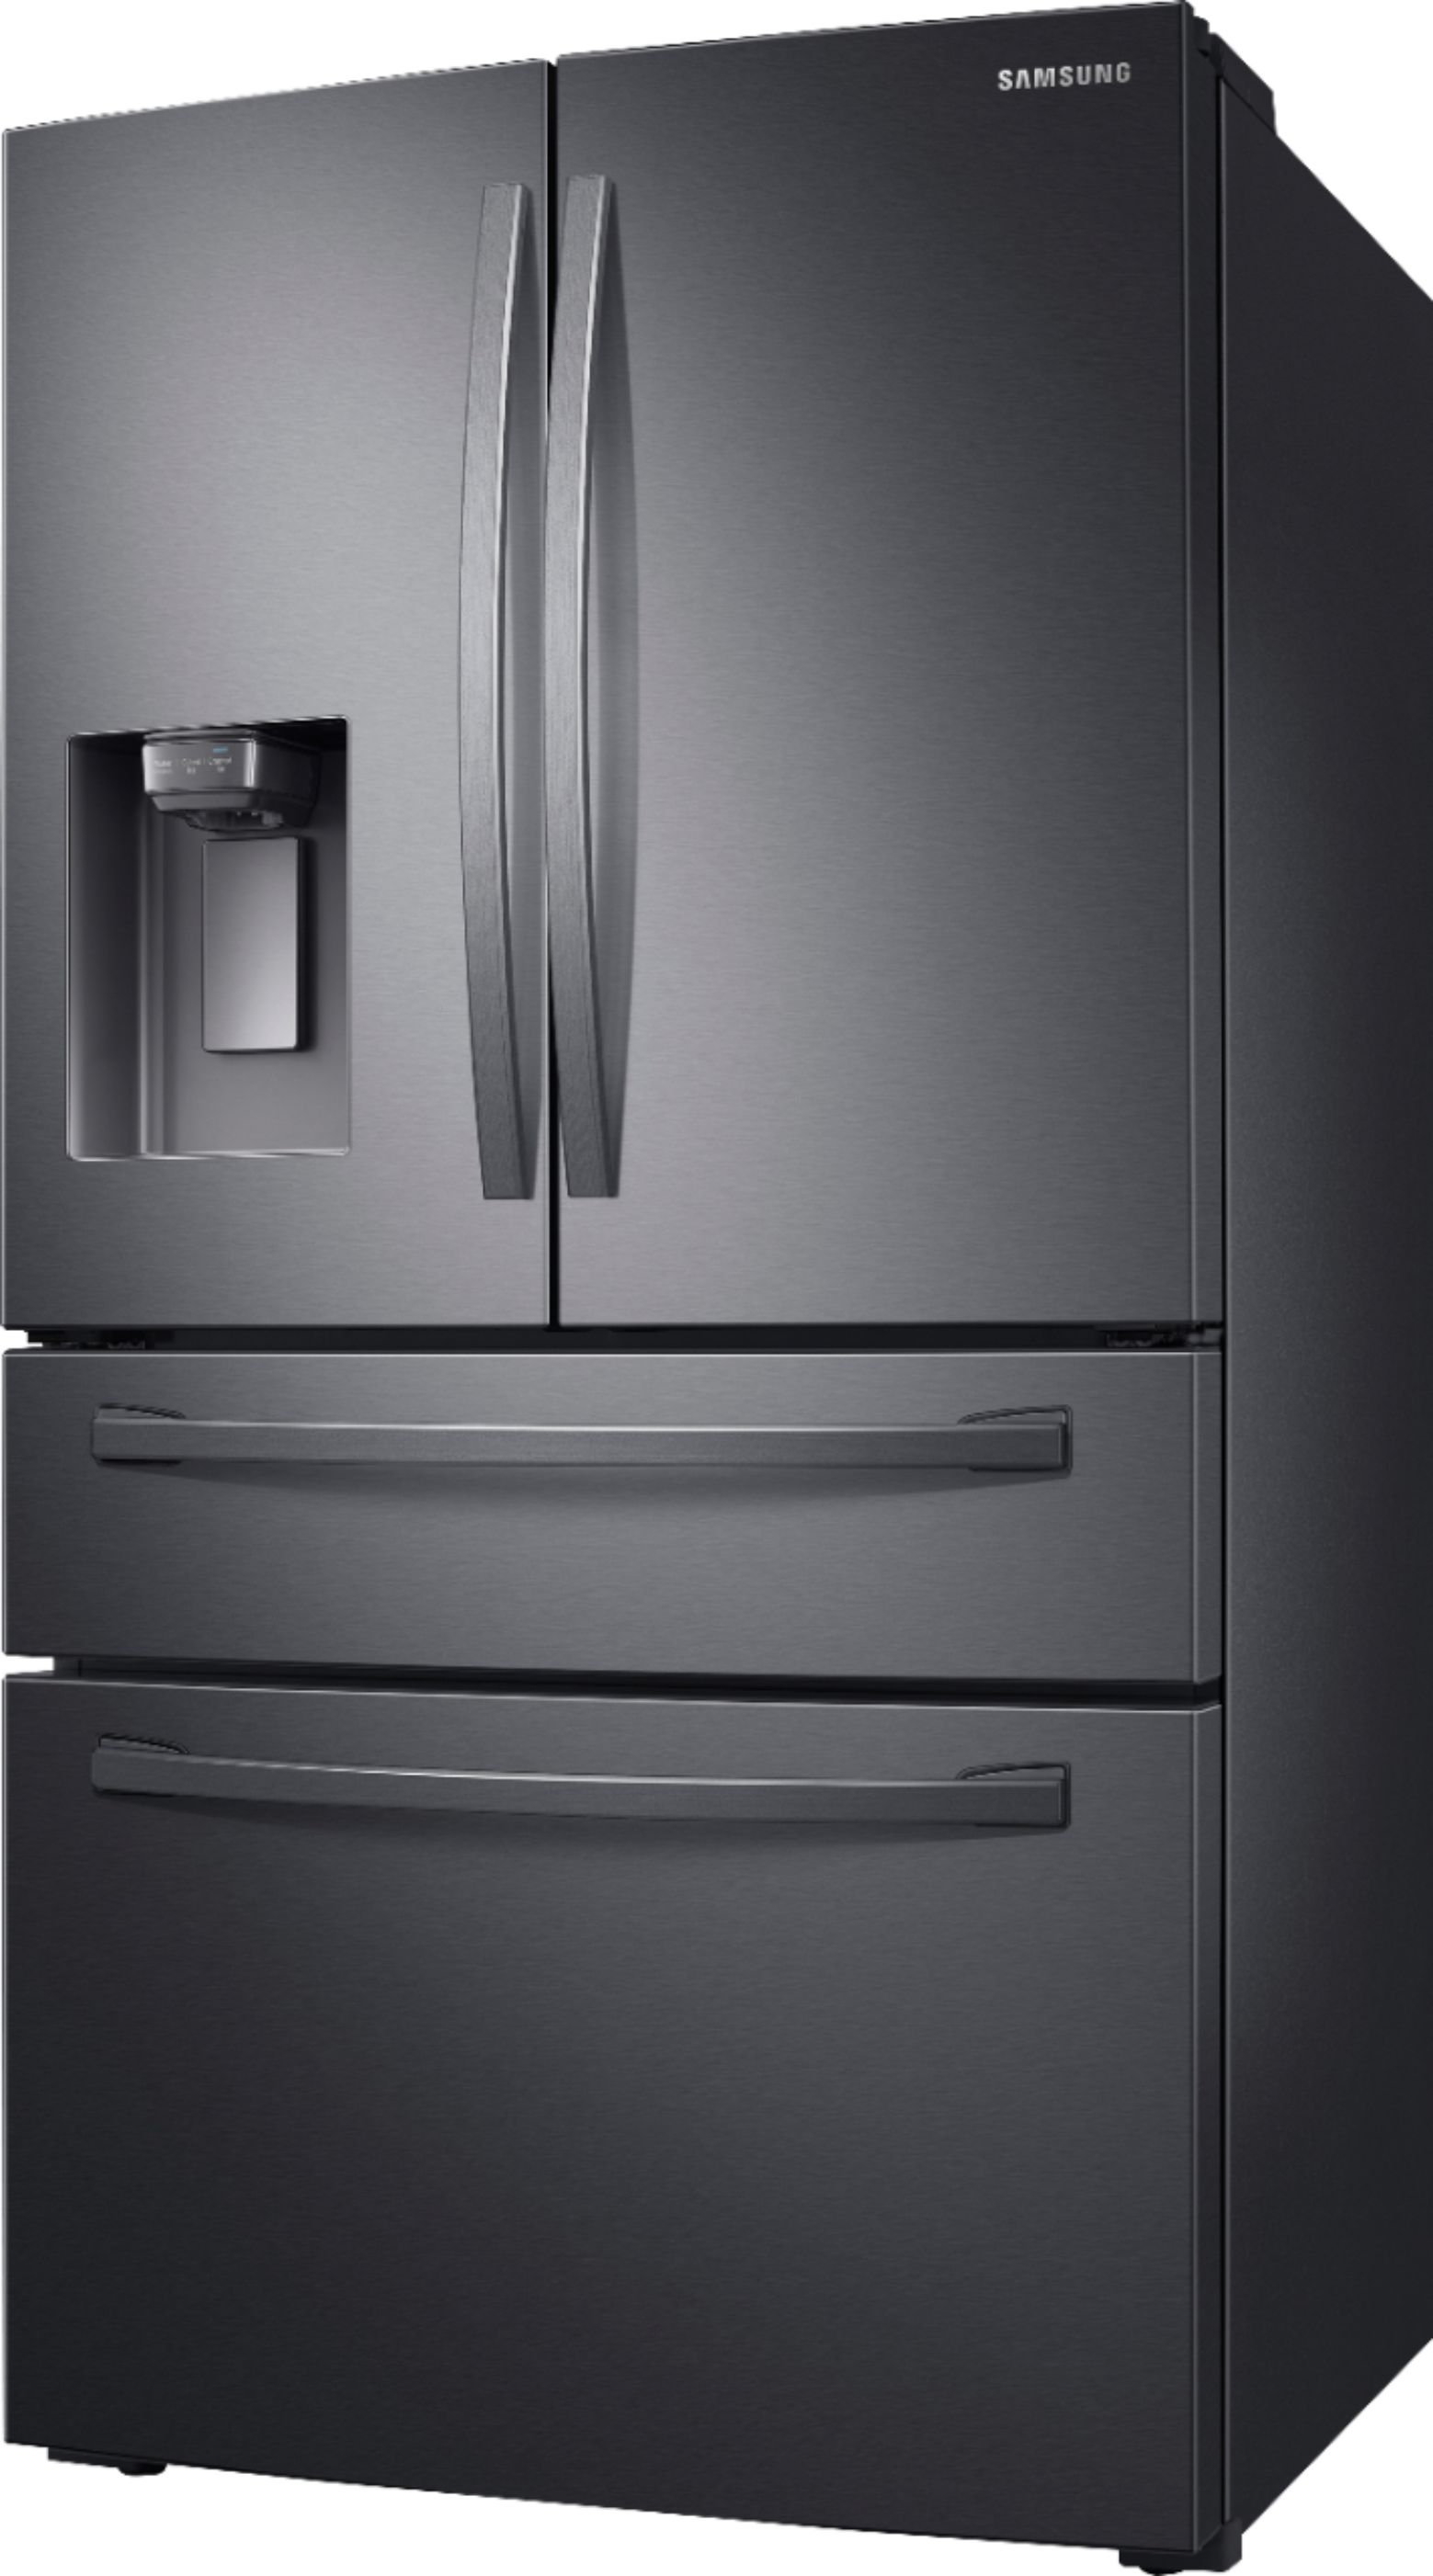 Left View: Samsung - 28  cu. ft. 4-Door French Door Refrigerator with FlexZone Drawer - Black stainless steel